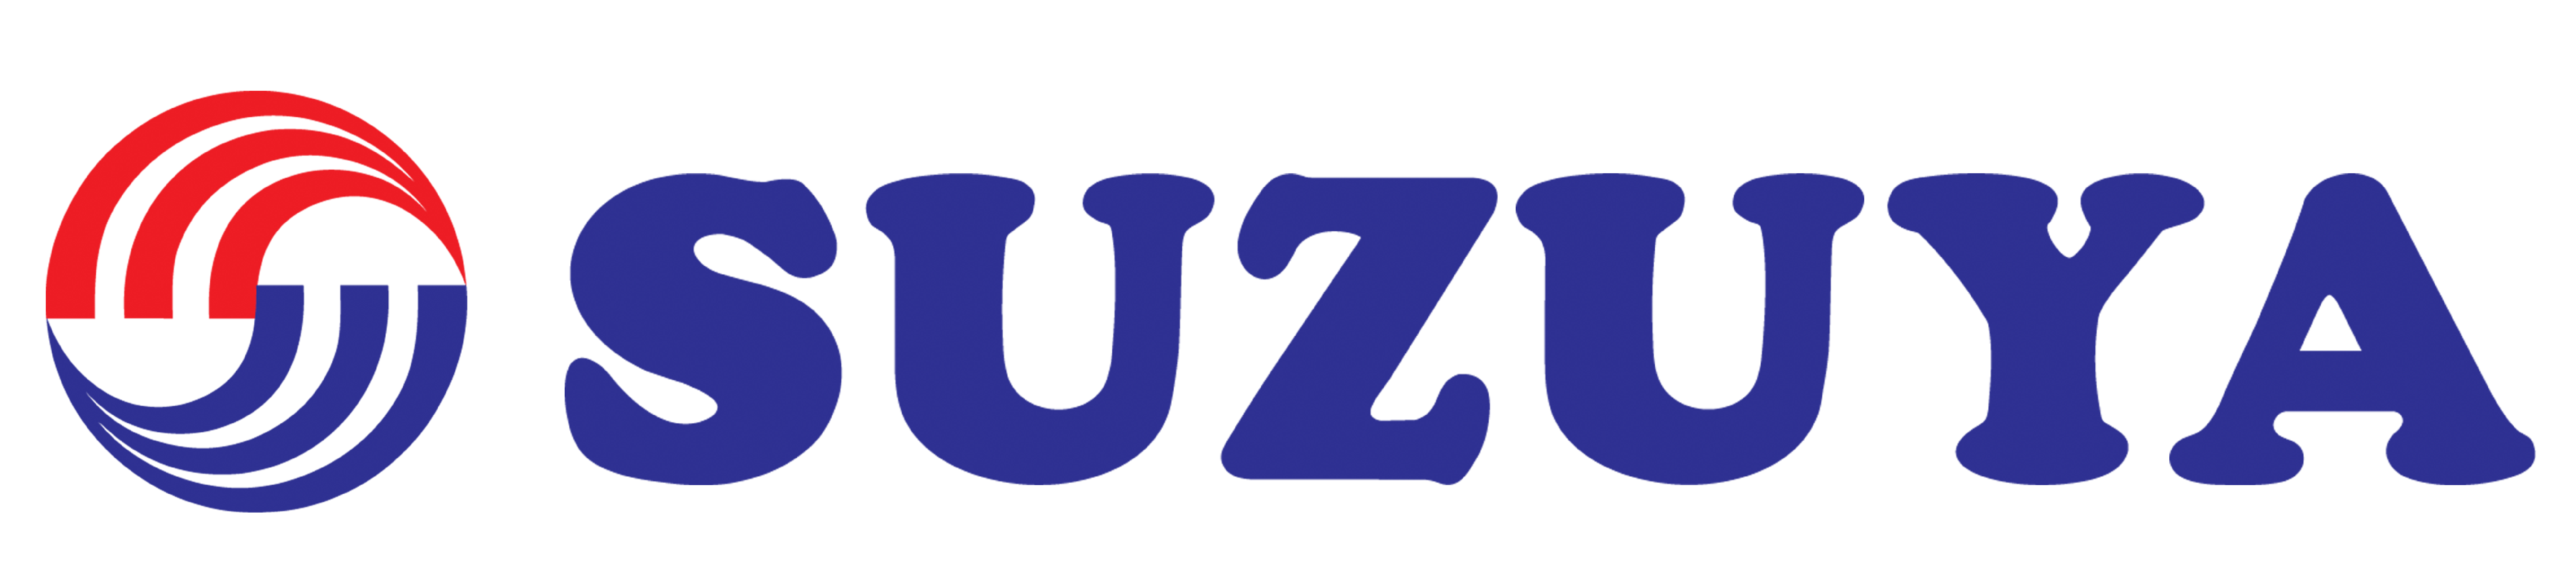 Suzuya